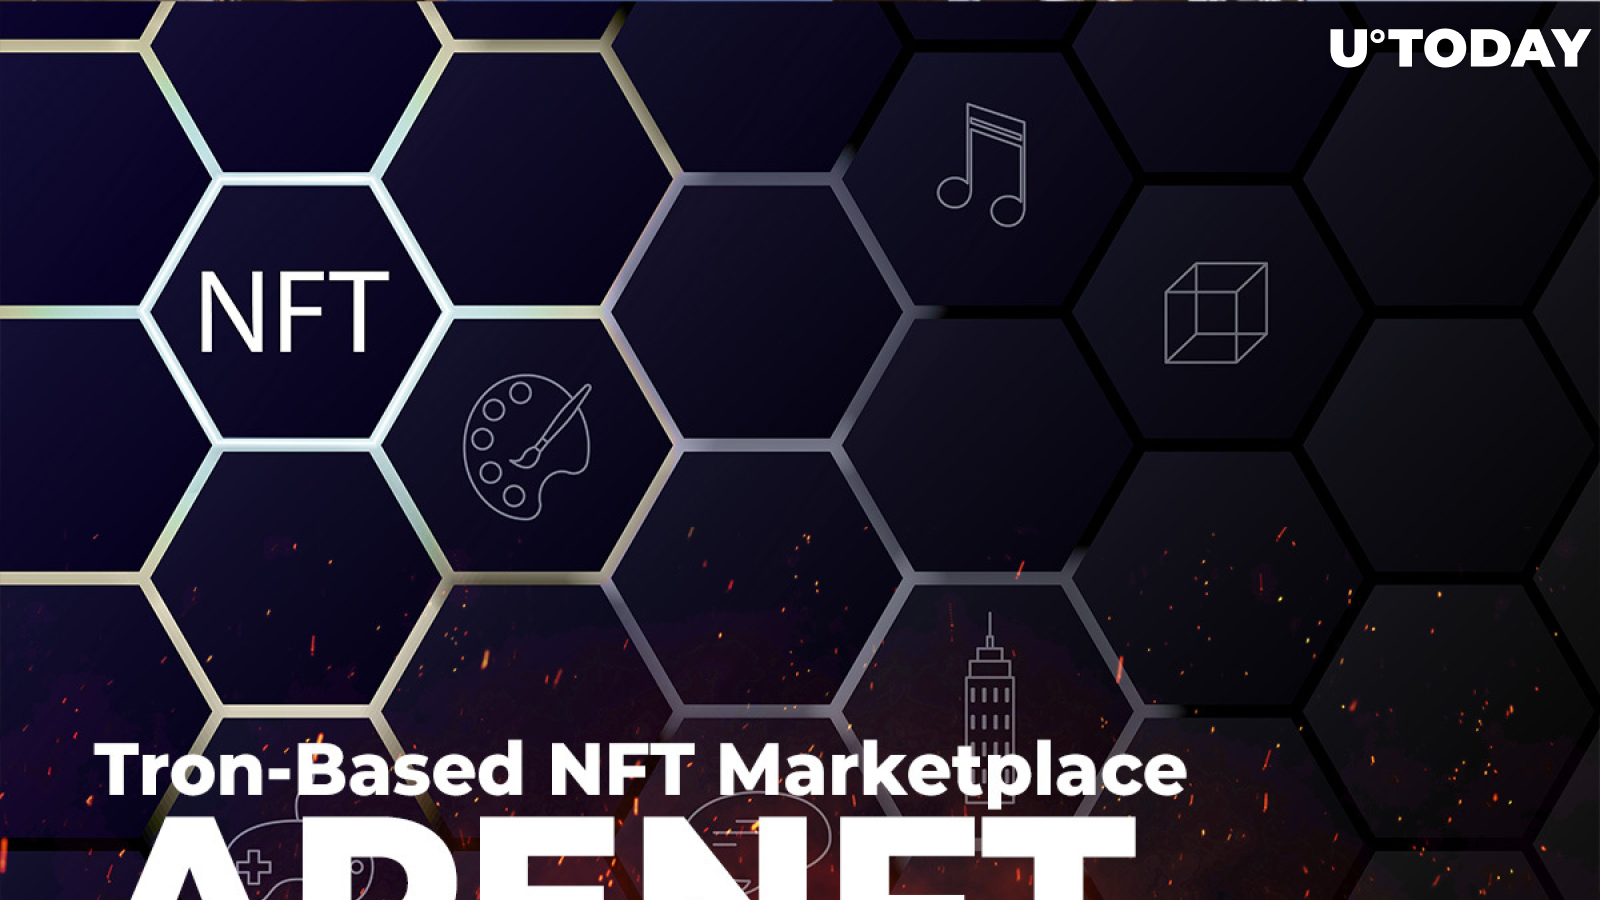 Tron-Based NFT Marketplace APENFT Burns $2.52 Million Worth of NFT: Details